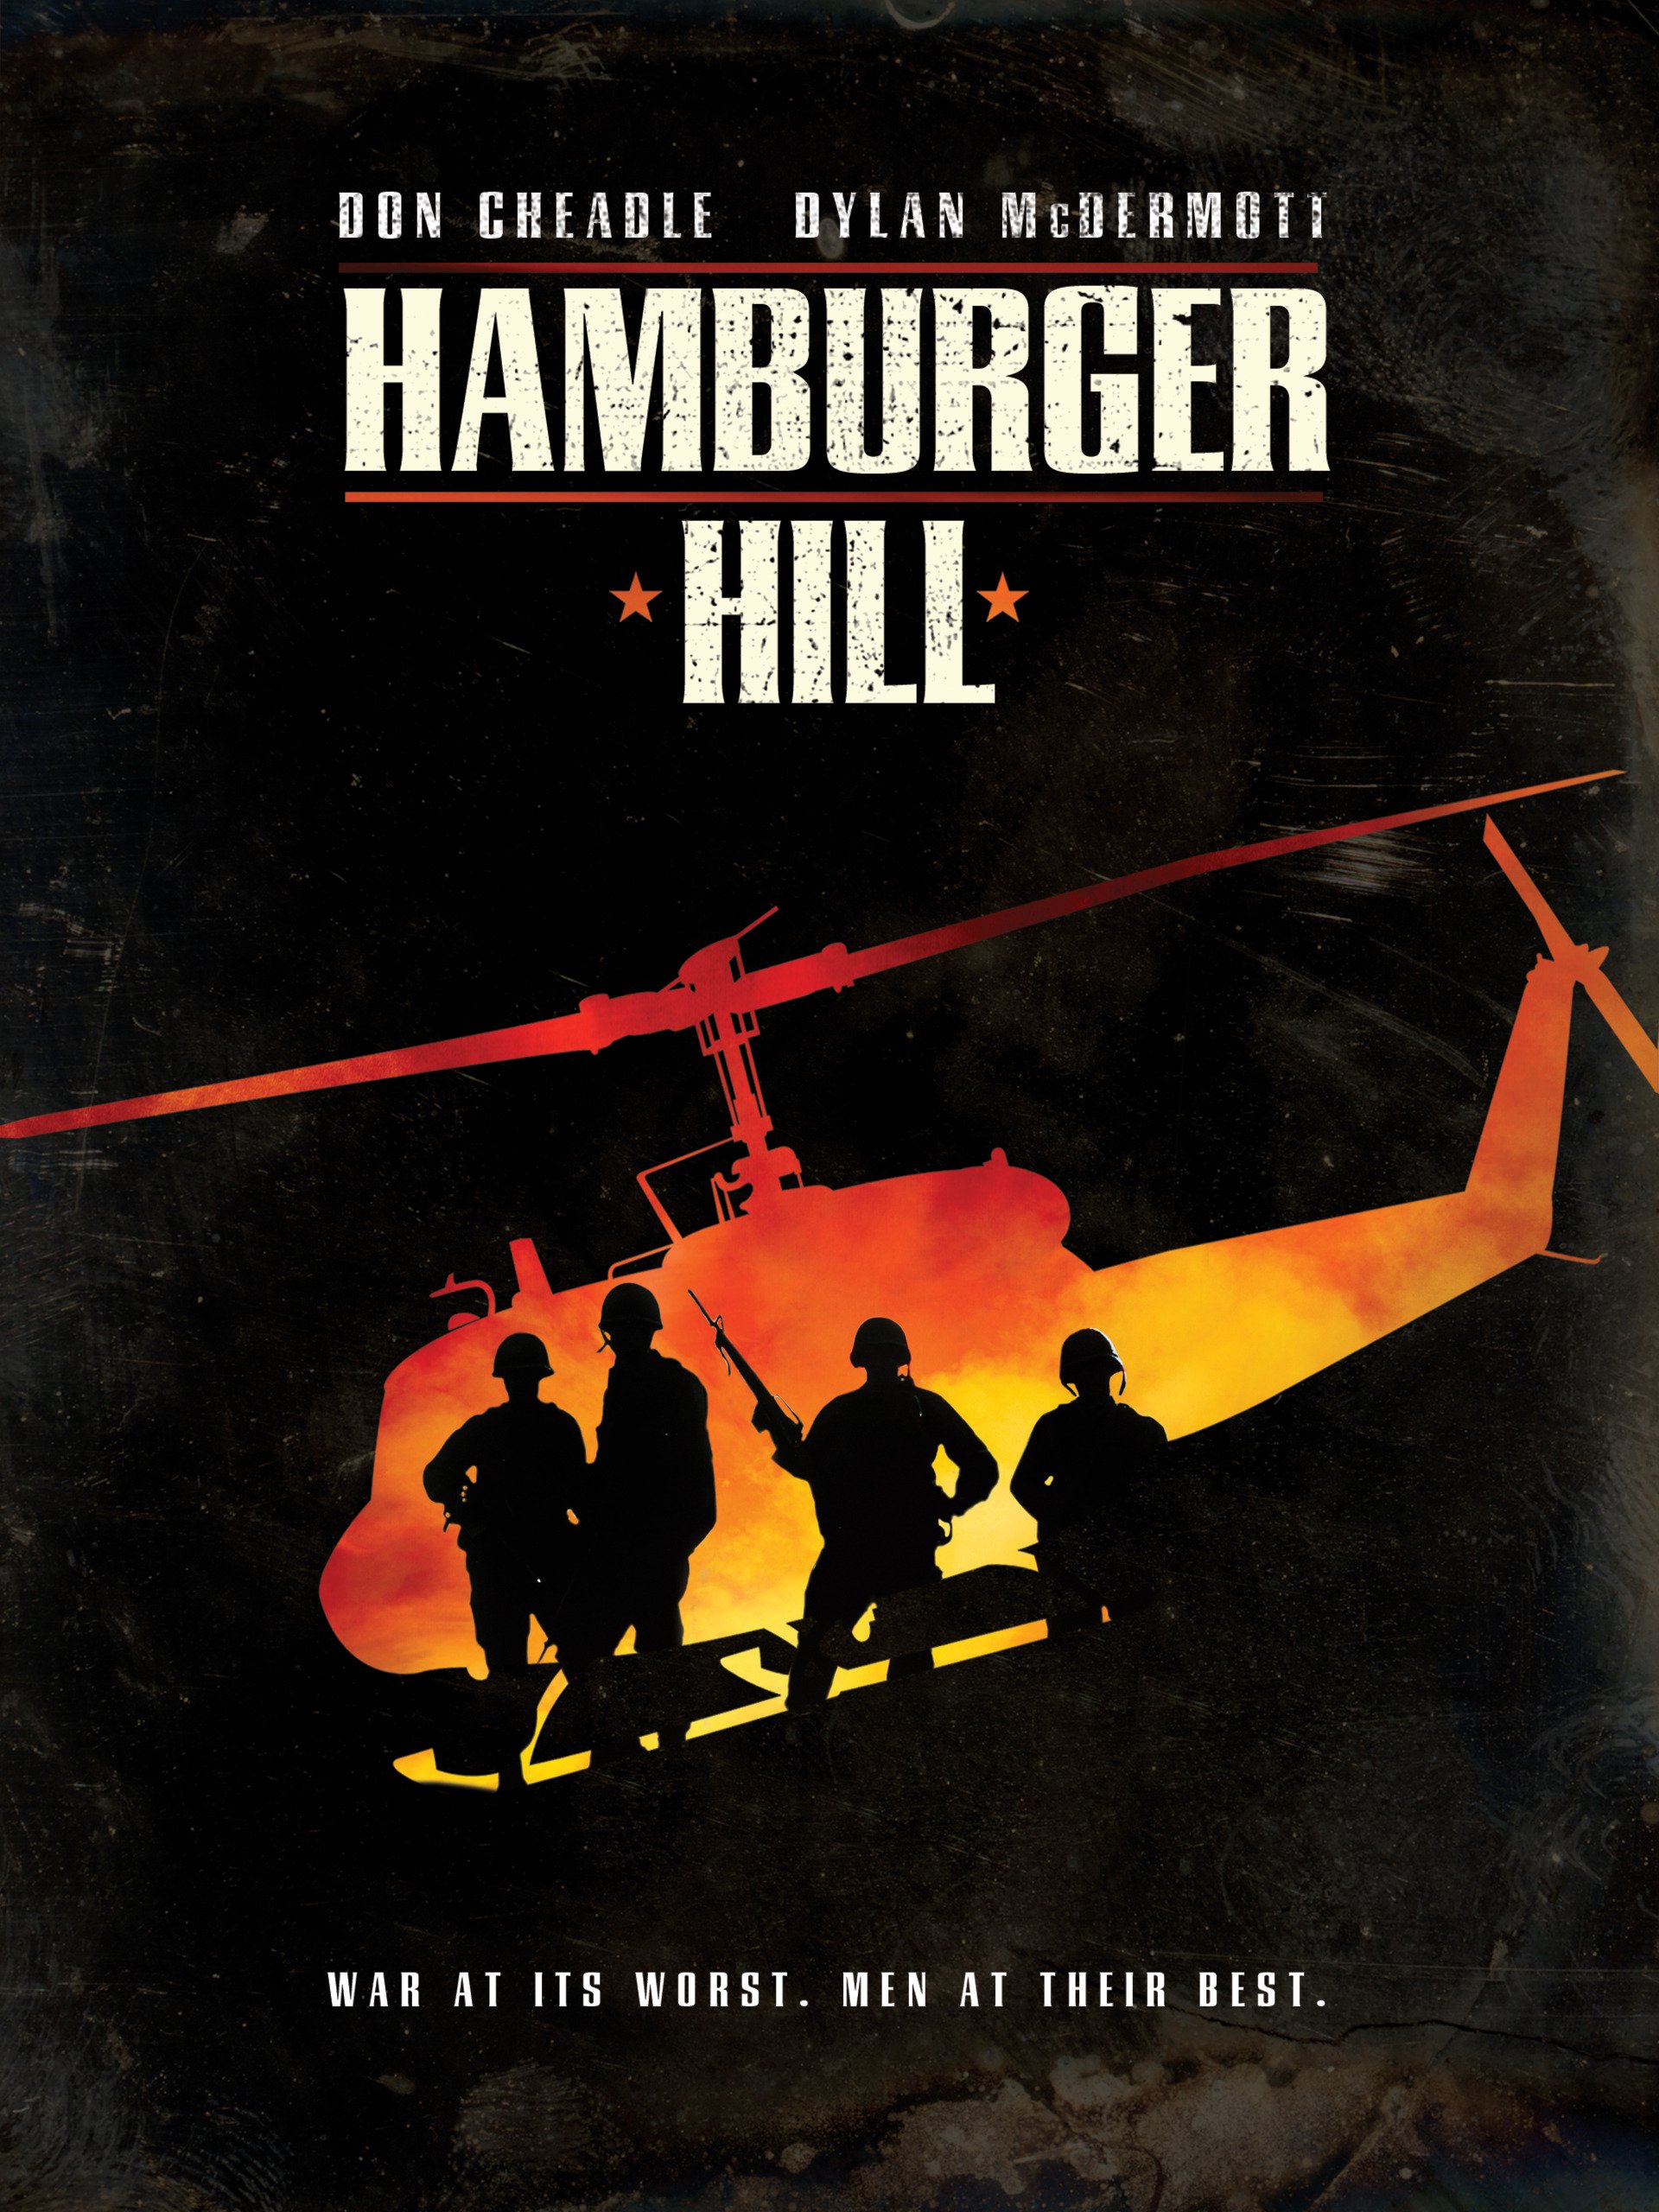 Stiahni si Filmy CZ/SK dabing Hamburger Hill (1987)(CZ/EN) = CSFD 68%